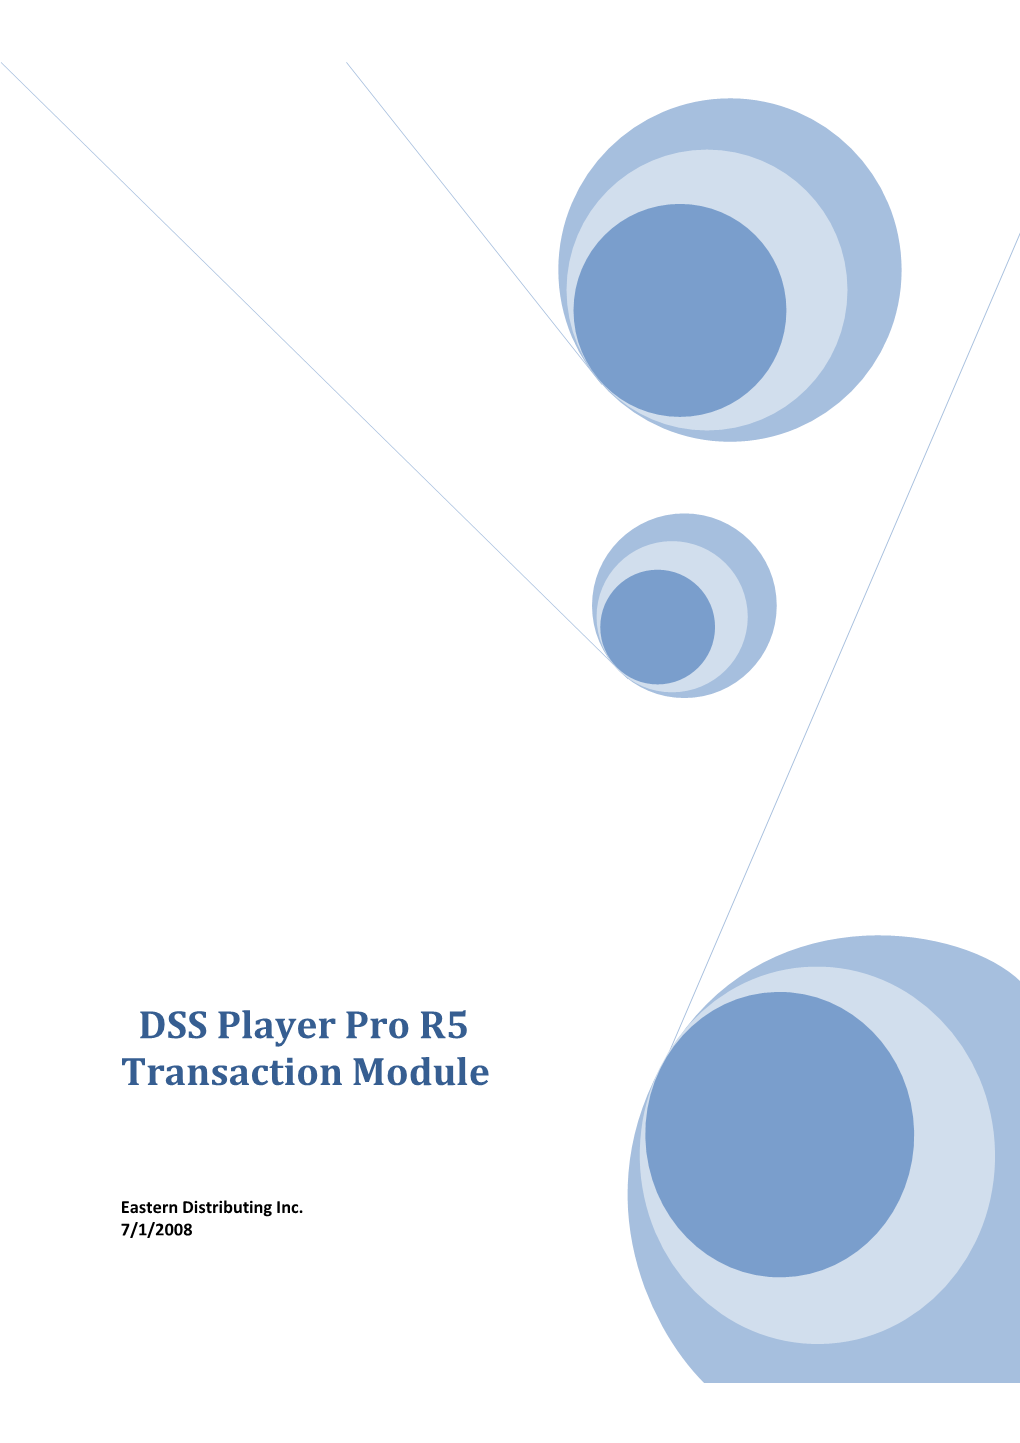 DSS Player Pro R5 Transaction Module